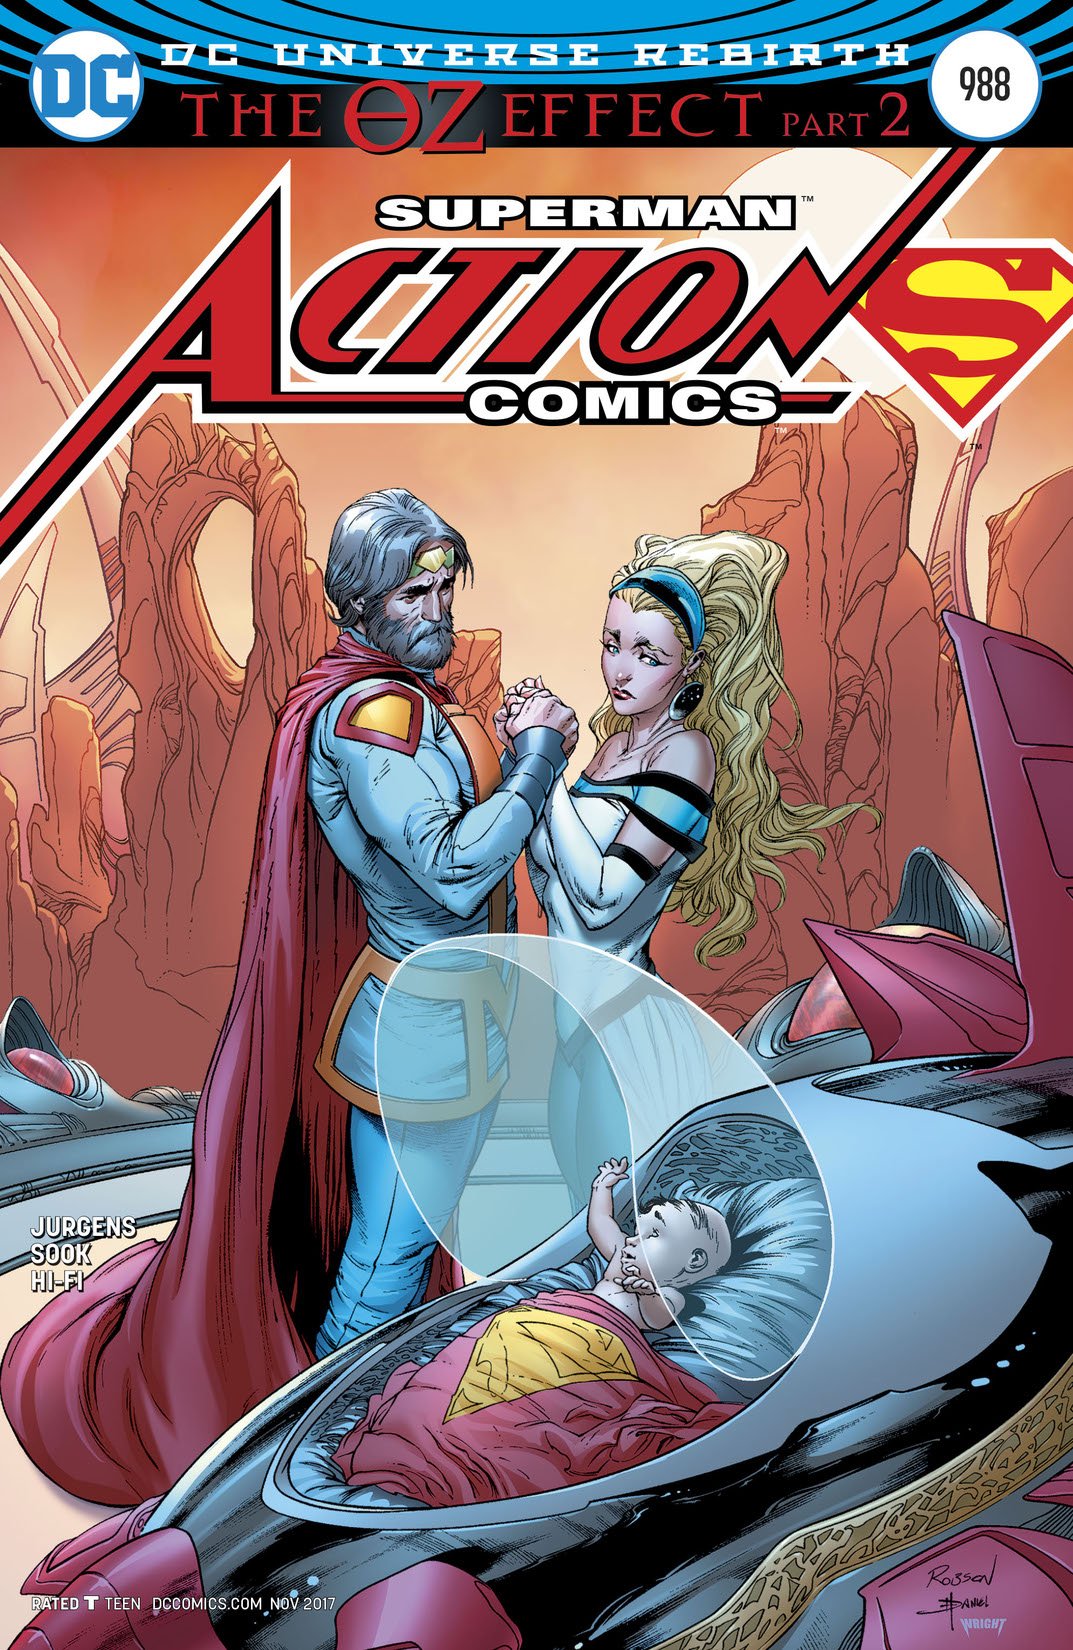 Action Comics (2016-) #988 preview images